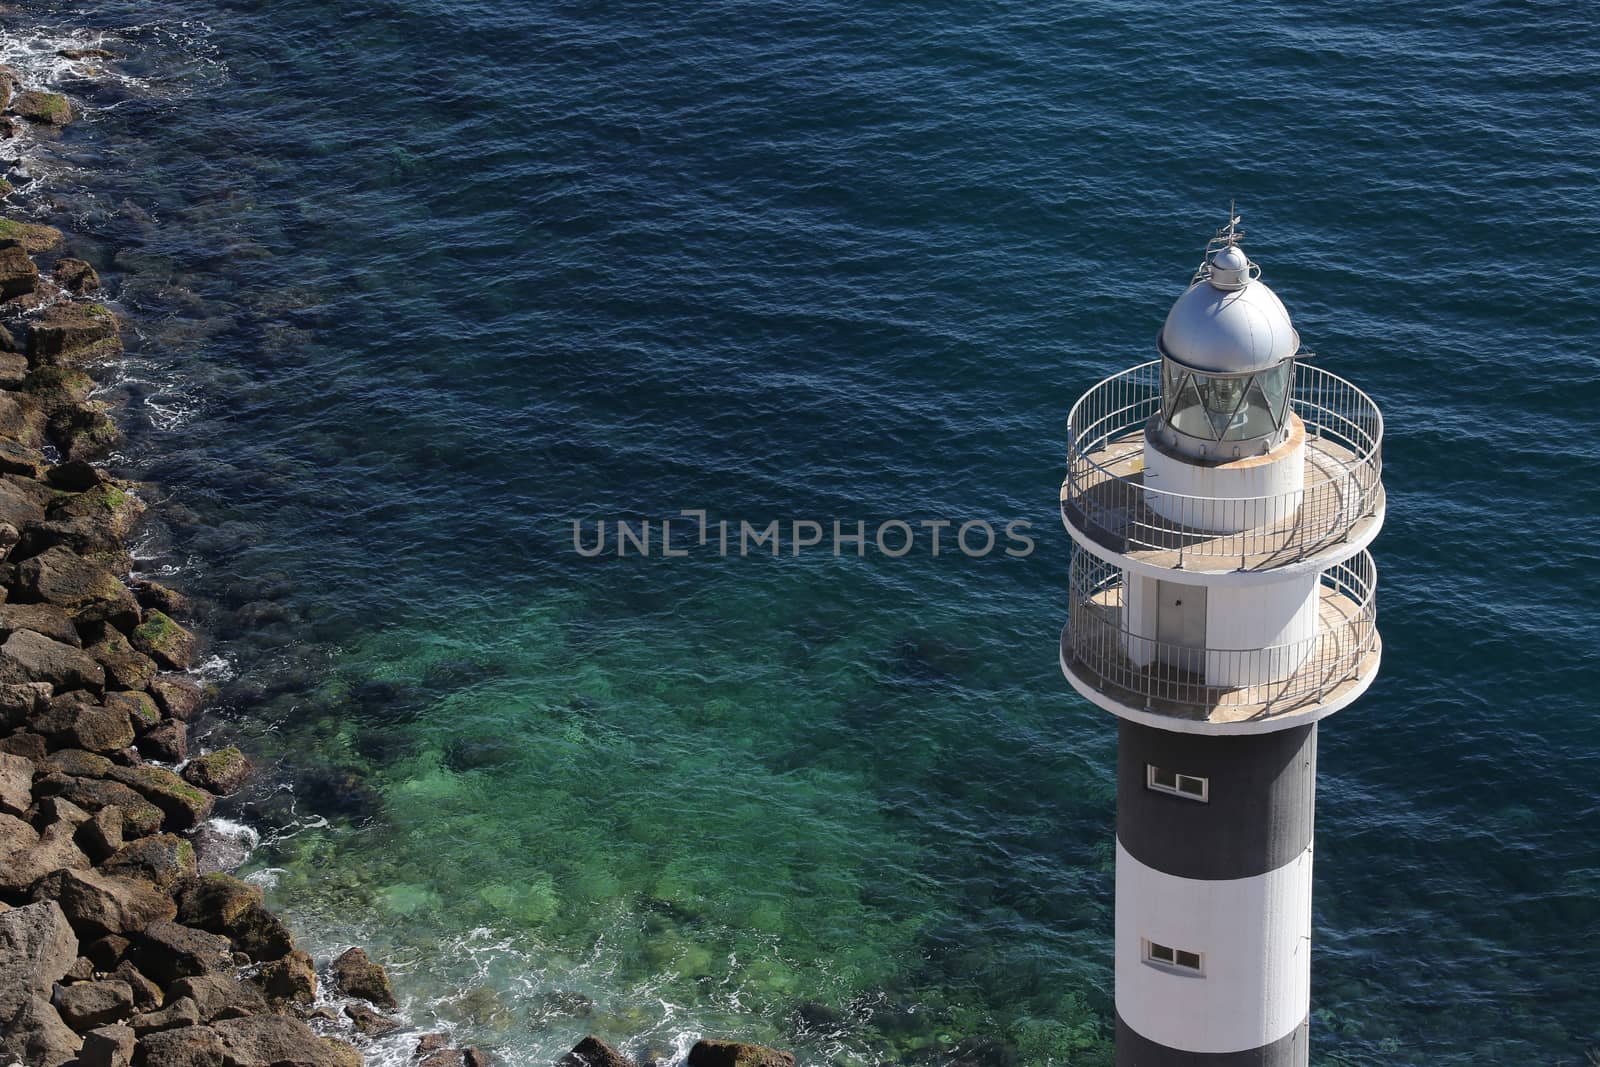 Lighthouse - Aguilas - Spain by SteveAllenPhoto